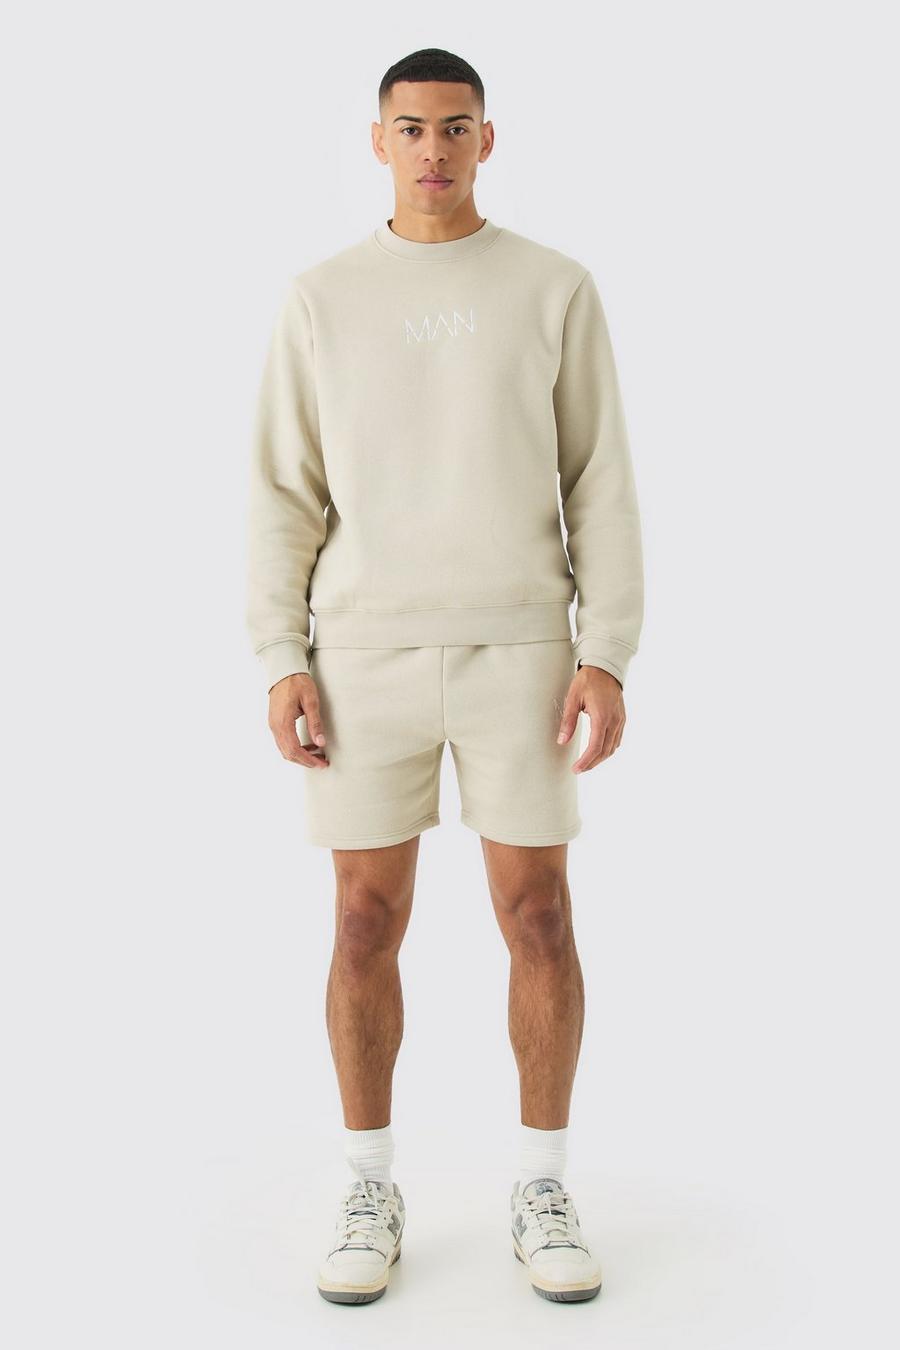 Kurzer Man Sweatshirt-Trainingsanzug, Stone